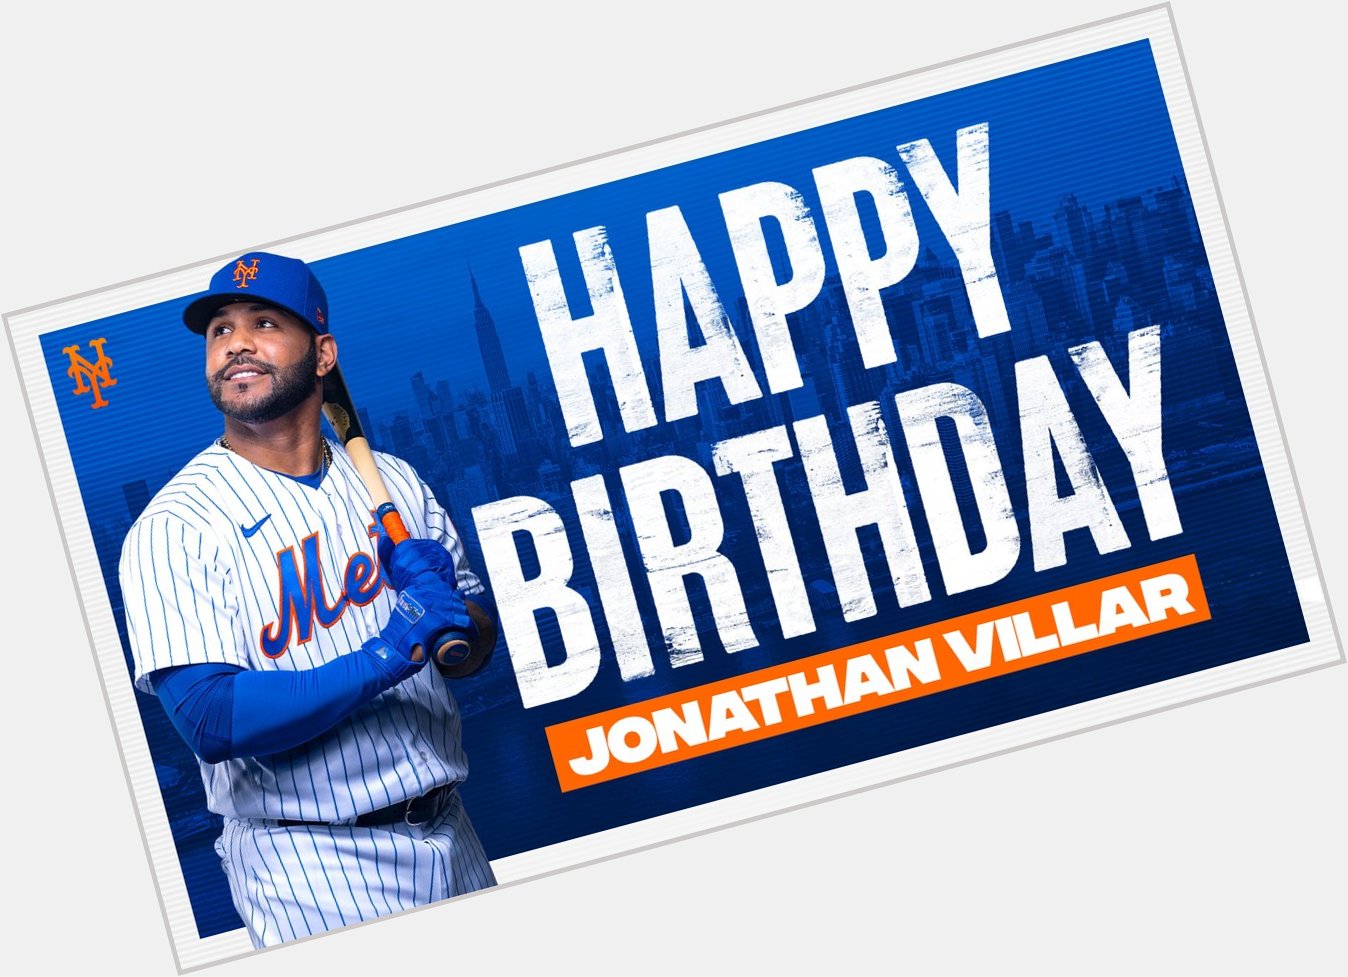 ¡Feliz cumpleaños! Join us in wishing Jonathan Villar a happy birthday! 